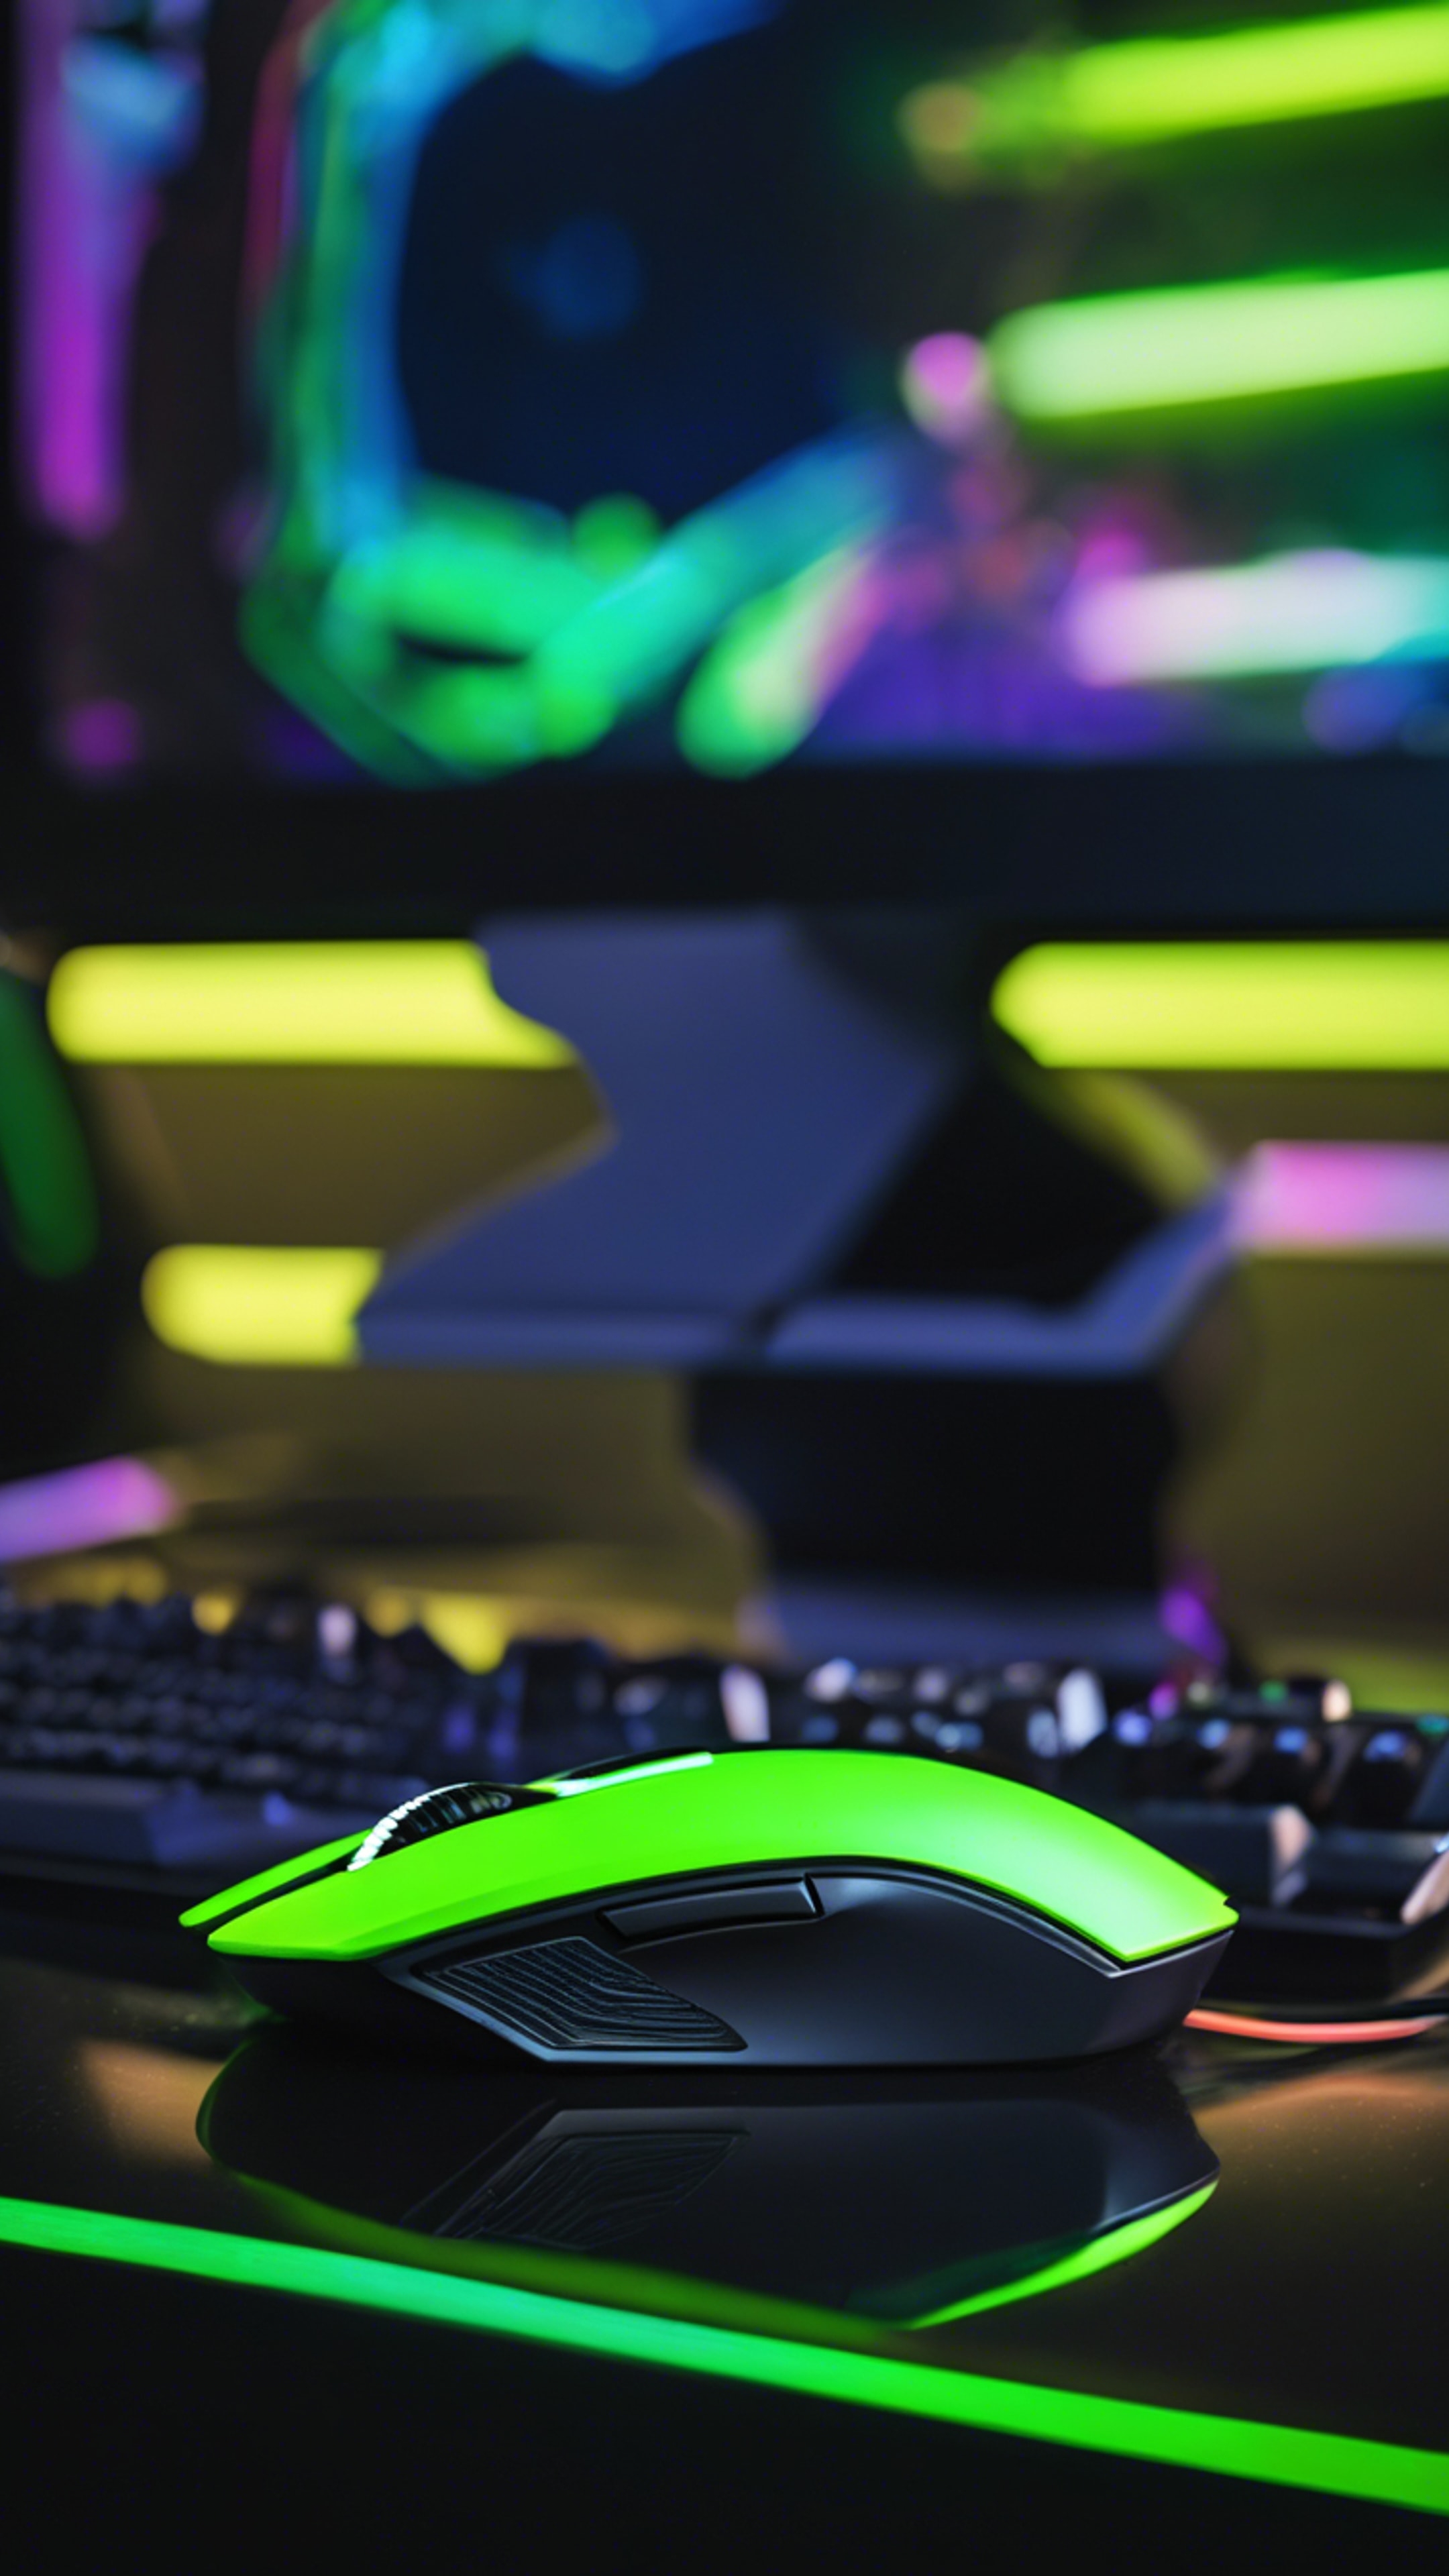 A cool neon green high-tech gaming mouse on a futuristic black desk setup.壁紙[6d2a2b9049aa4c81a995]